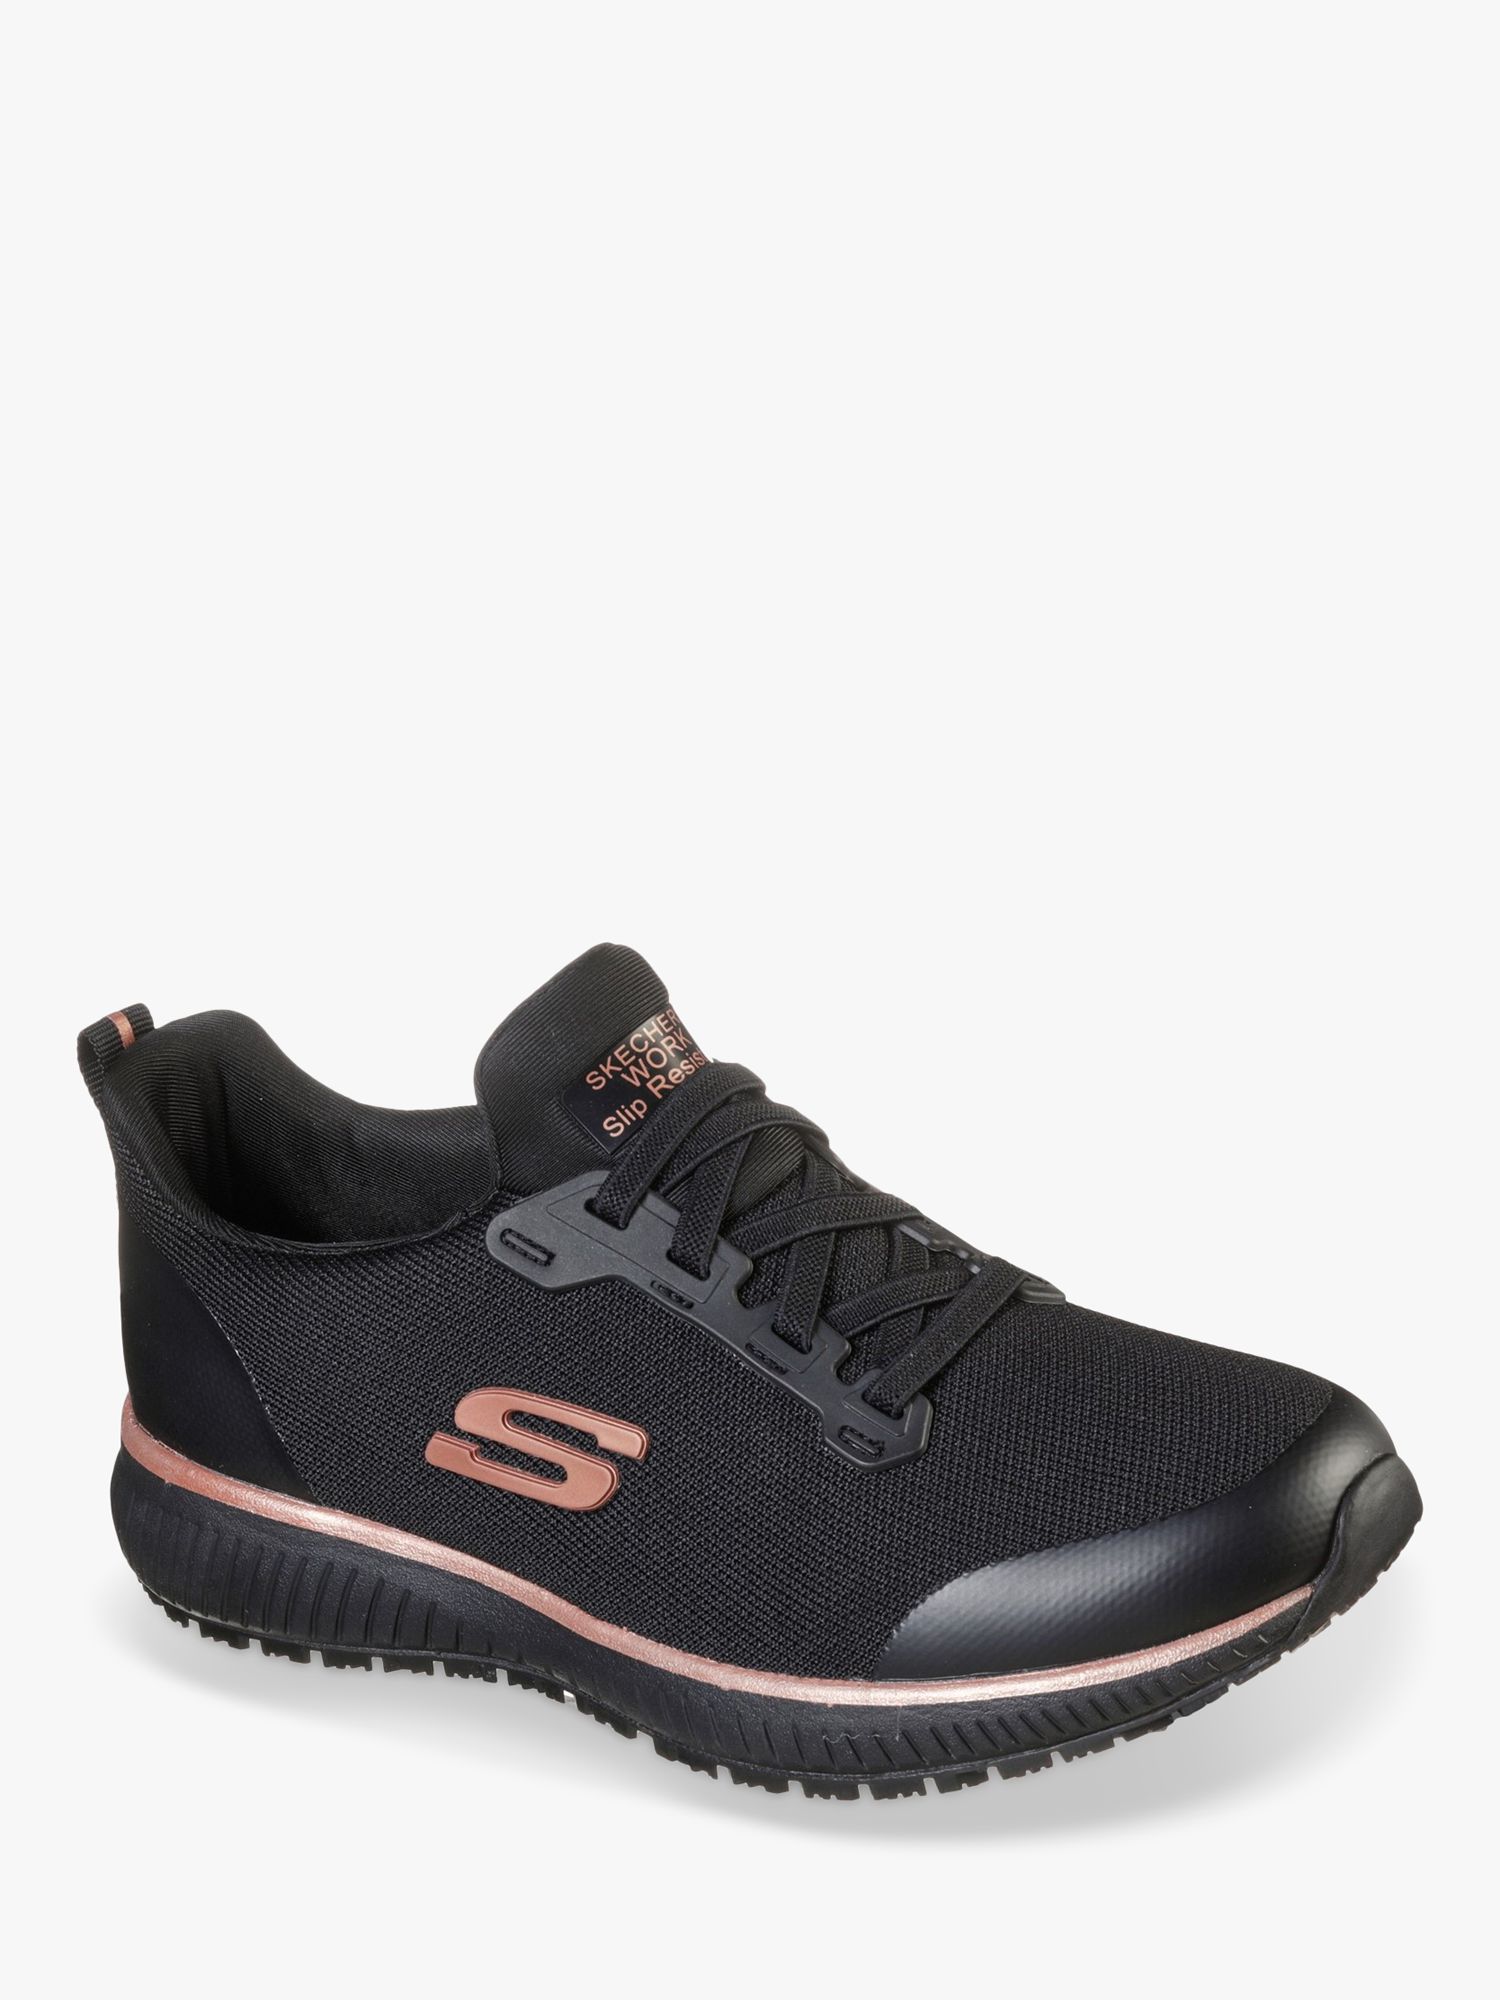 Skechers Squad SR Occupational Shoes, Black, 6